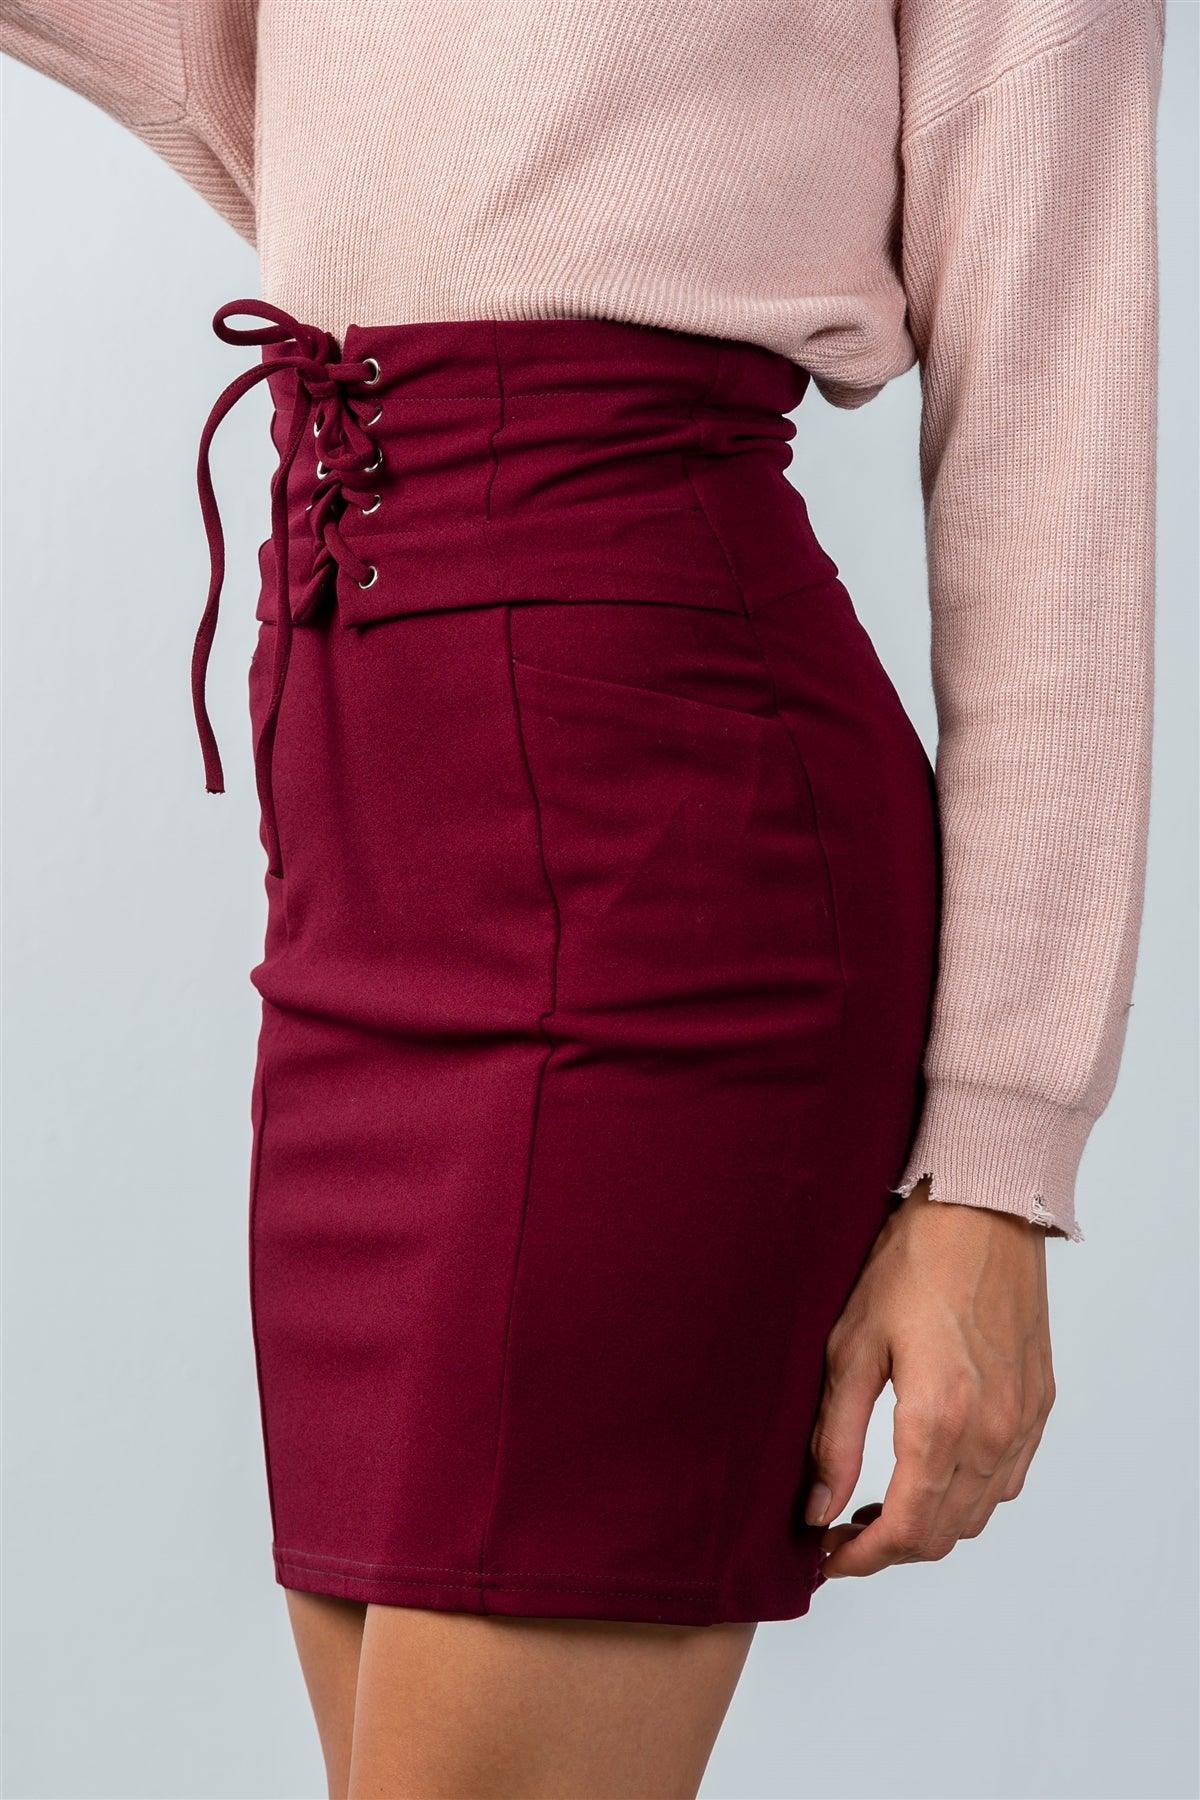 Burgundy Lace Up Pencil Mini Skirt / 2-2-2